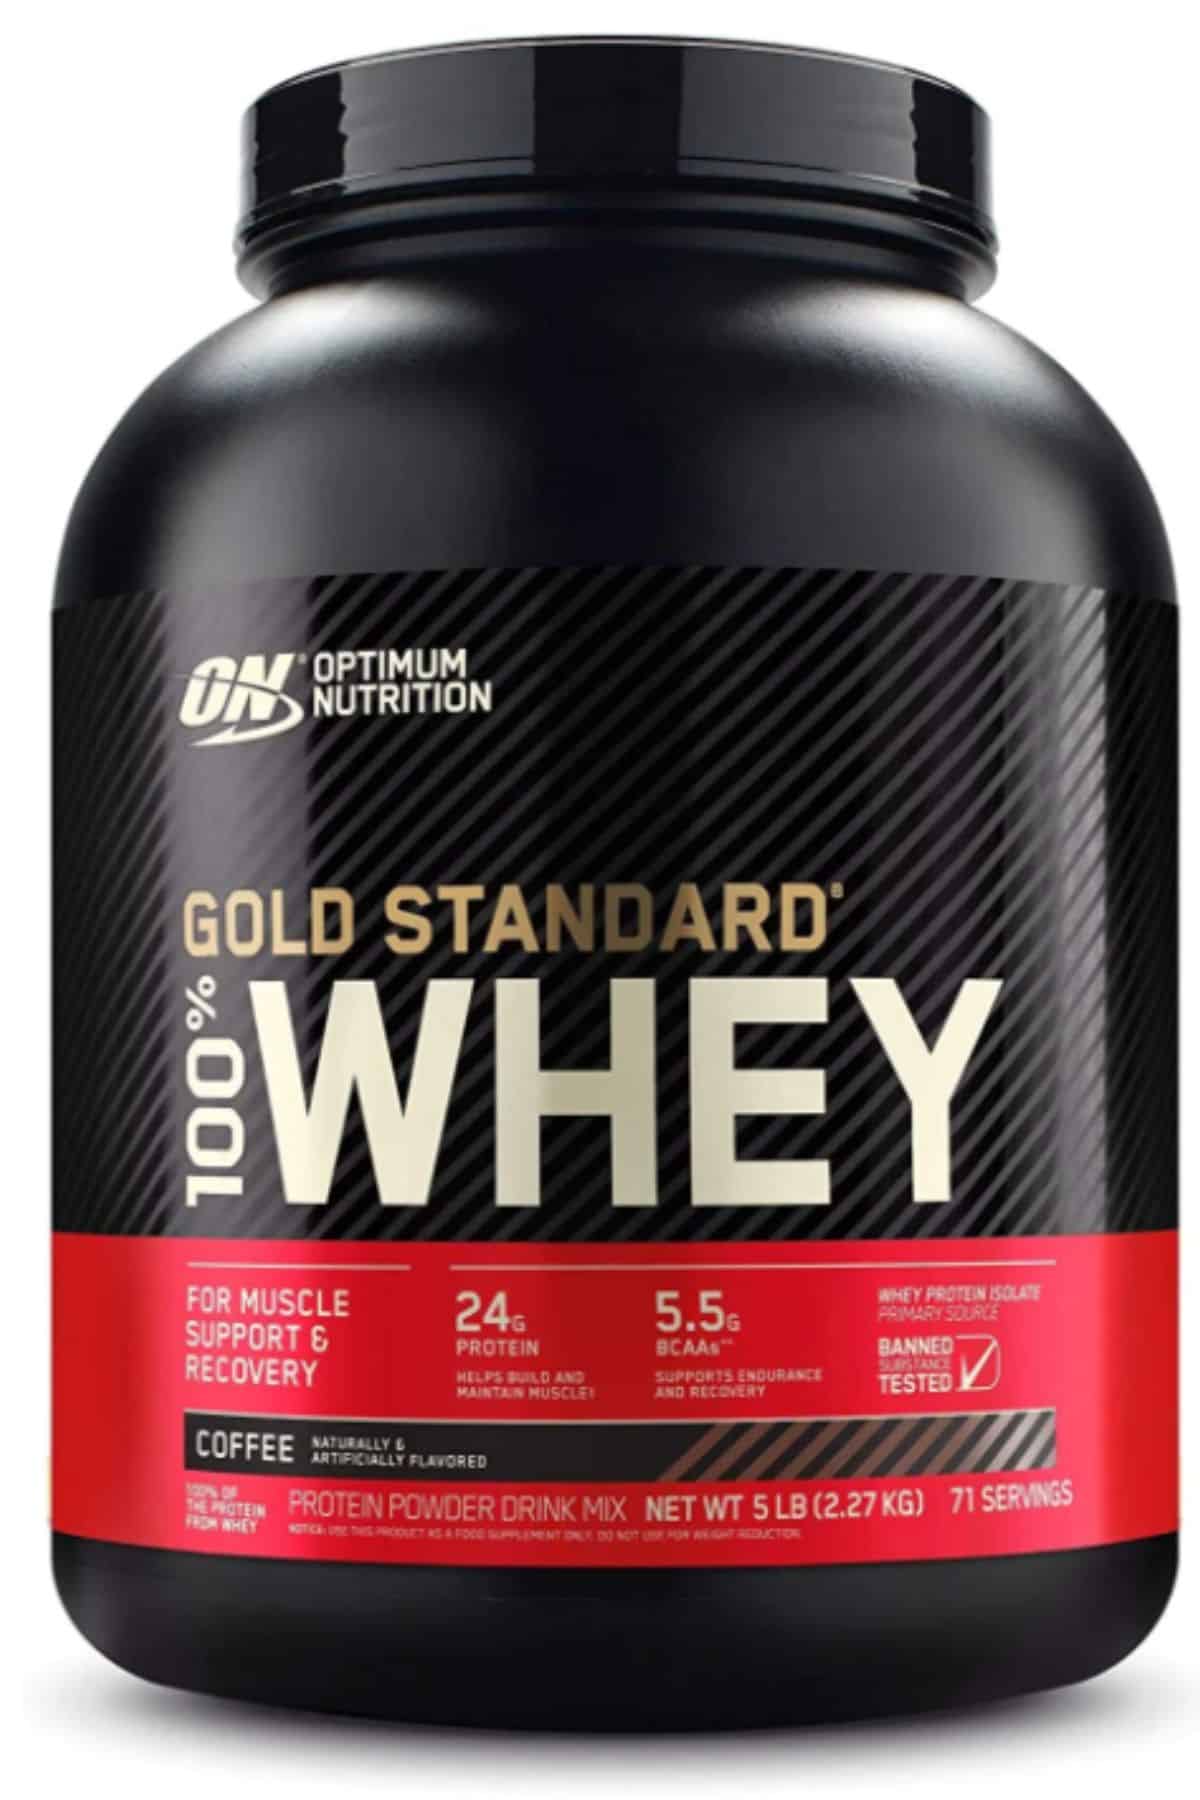 Optimum Nutrition Gold Standard Whey protein.